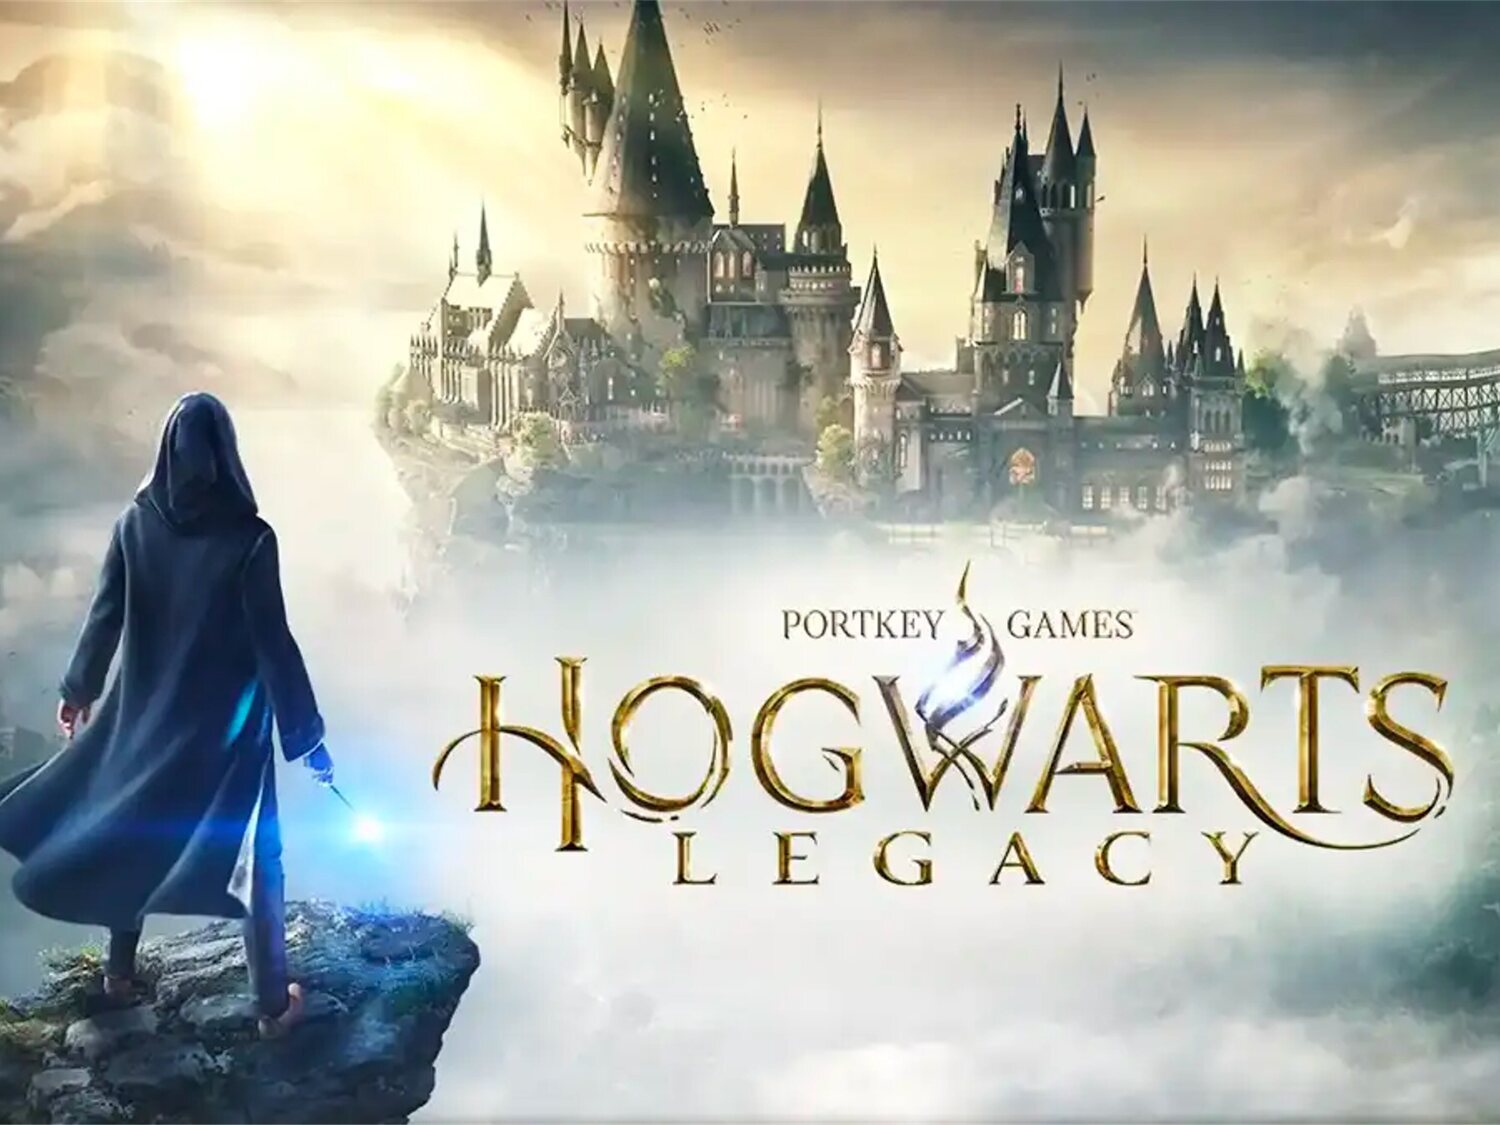 Lo que podemos esperar de 'Hogwarts Legacy': la gran aventura para fans de Harry Potter